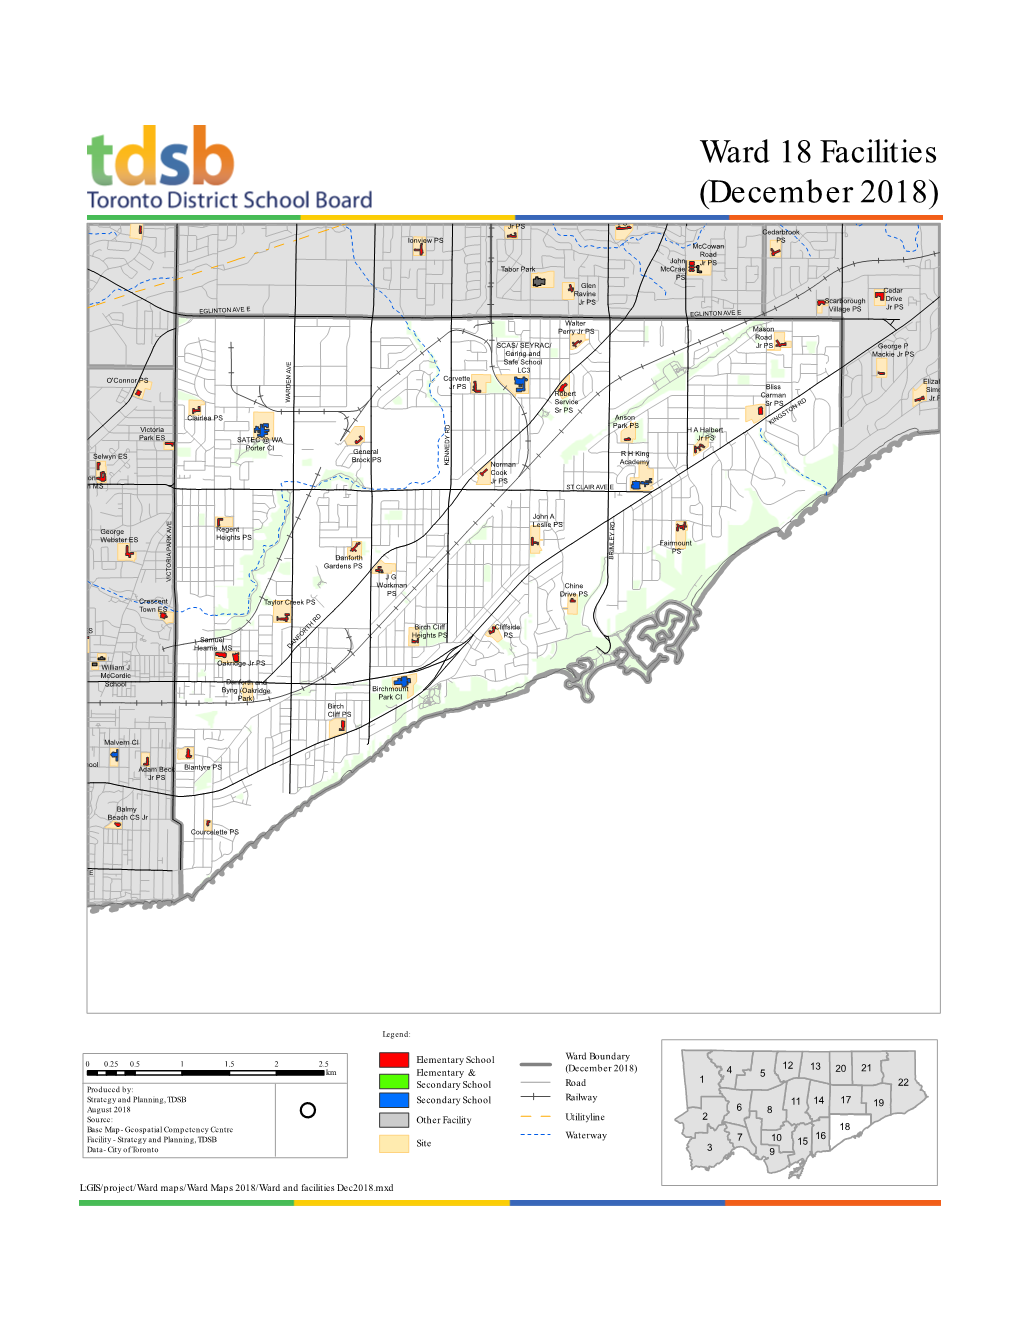 Ward 18 Facilities (December 2018)